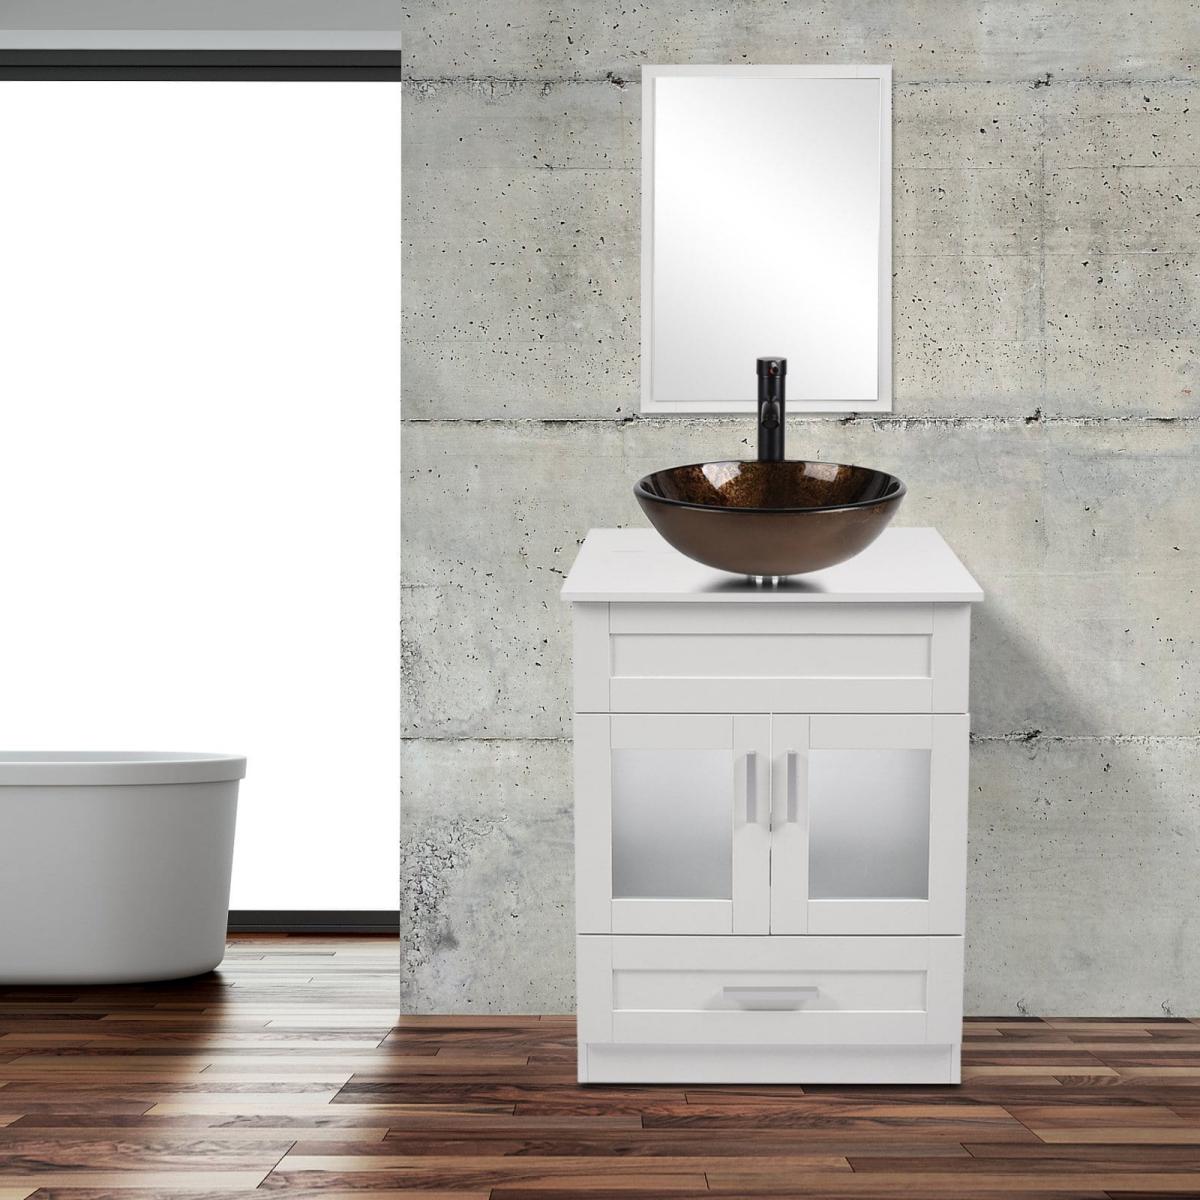 Elecwish White Bathroom Vanity with Brown Round Sink Set BA1001-WH display scene